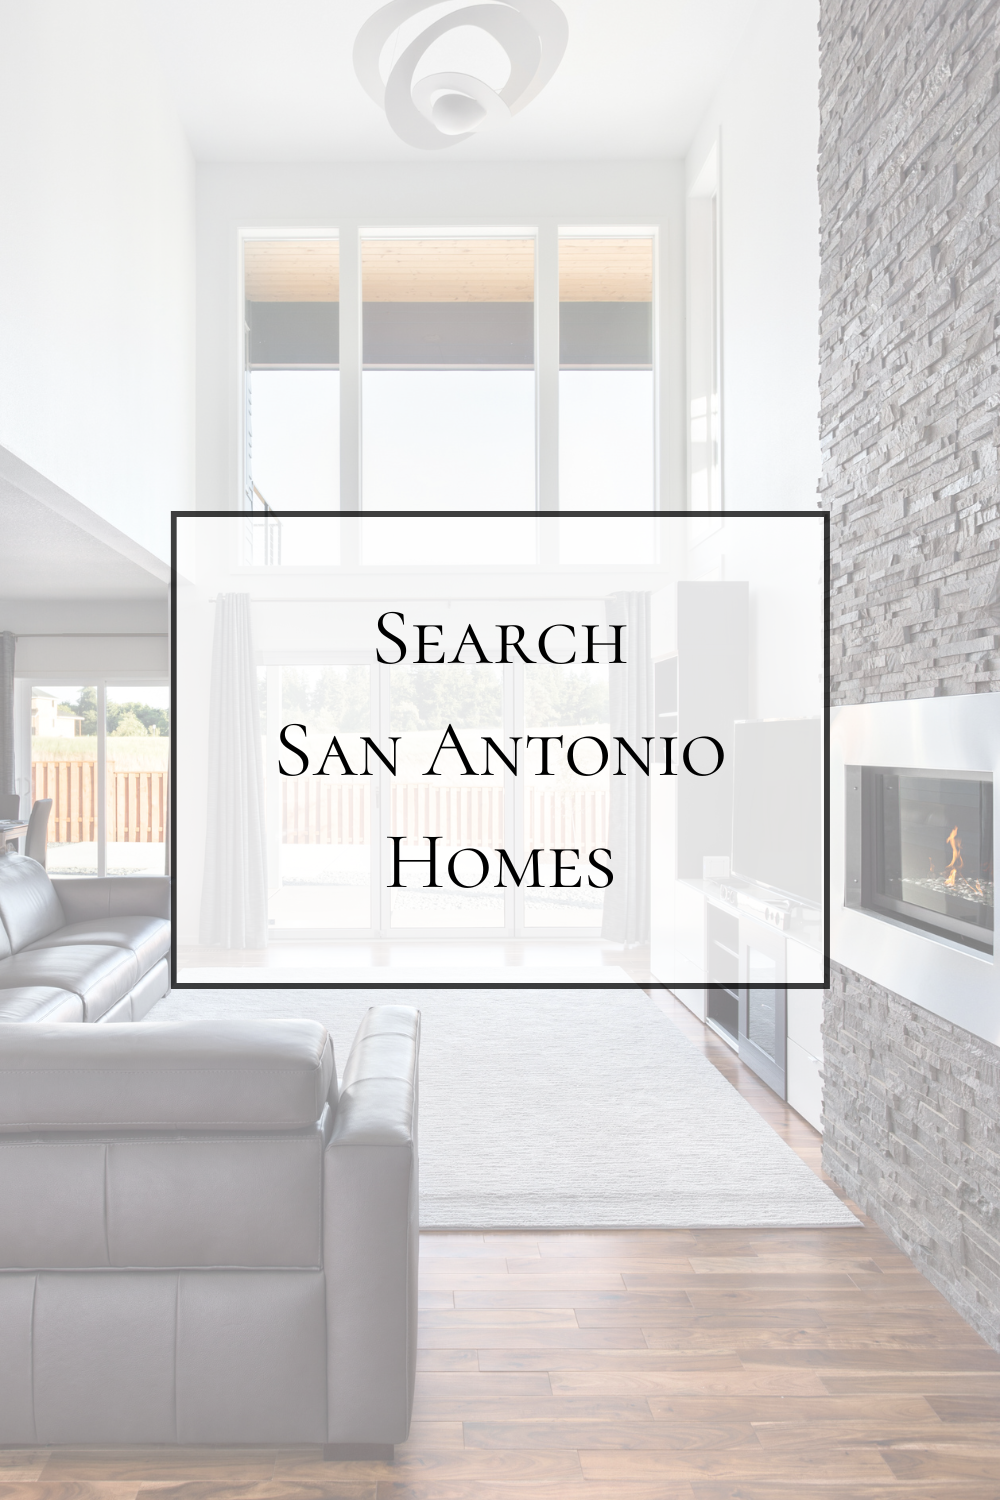 search homes where to live in san antonio, Tammy Dominguez - San Antonio realtor & relocation specialist